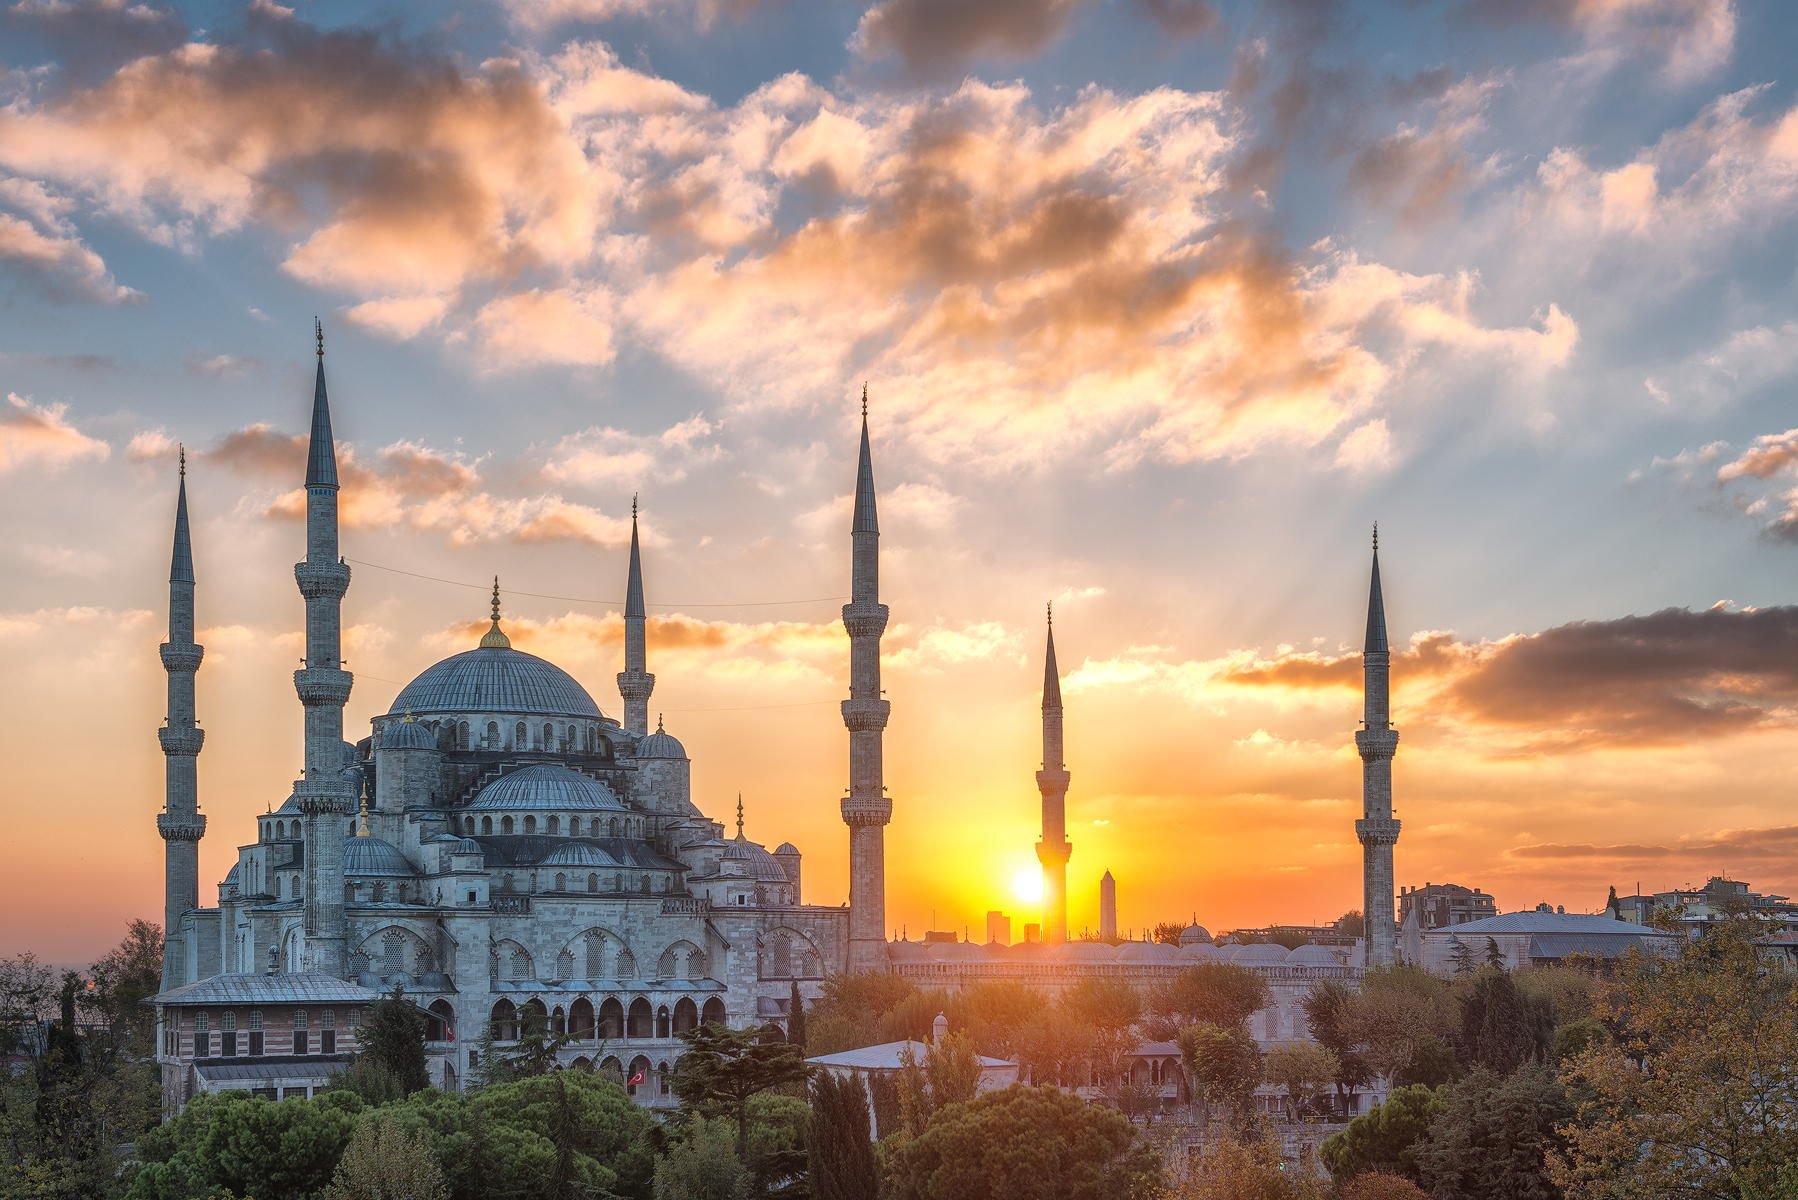 Sultan Ahmed Mosque Istanbul, Turkey by Danny Xeero